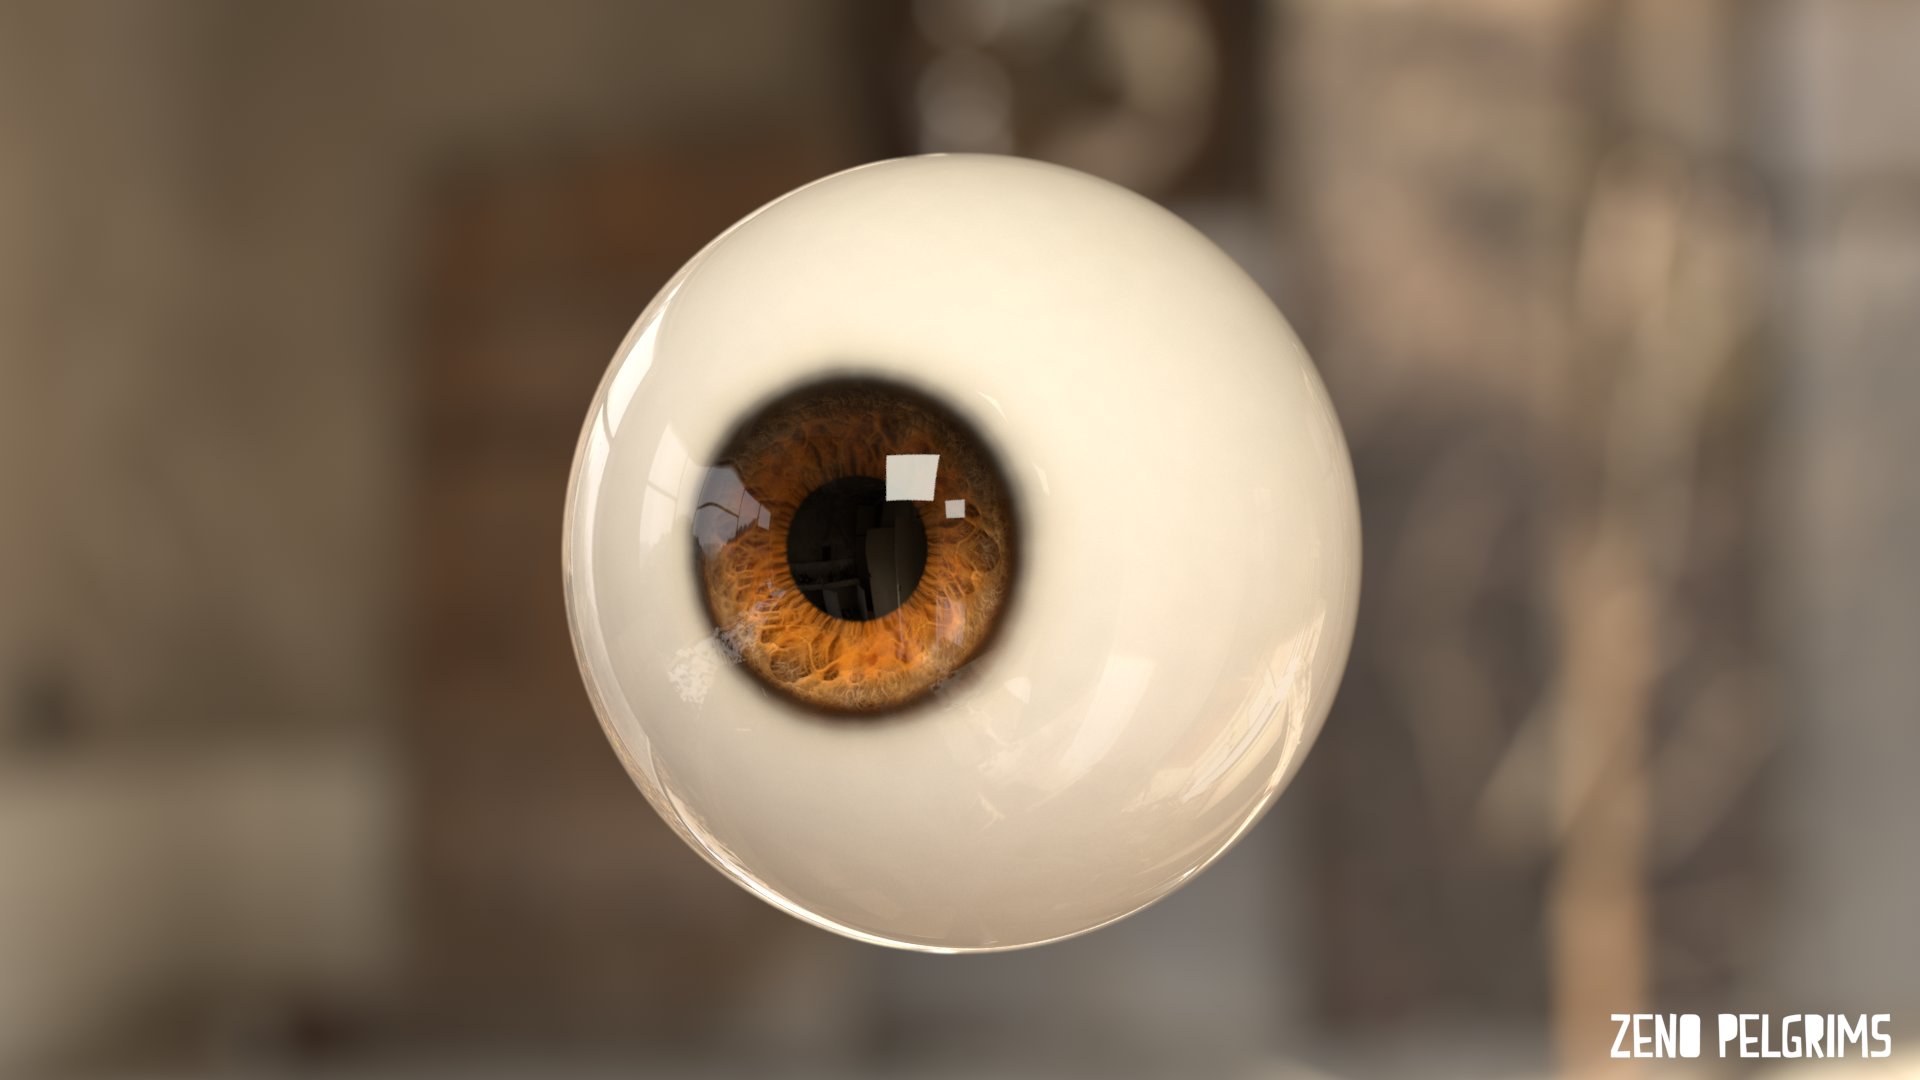 LOTHLENAN—Realistic Eyes vs Anime Eyes